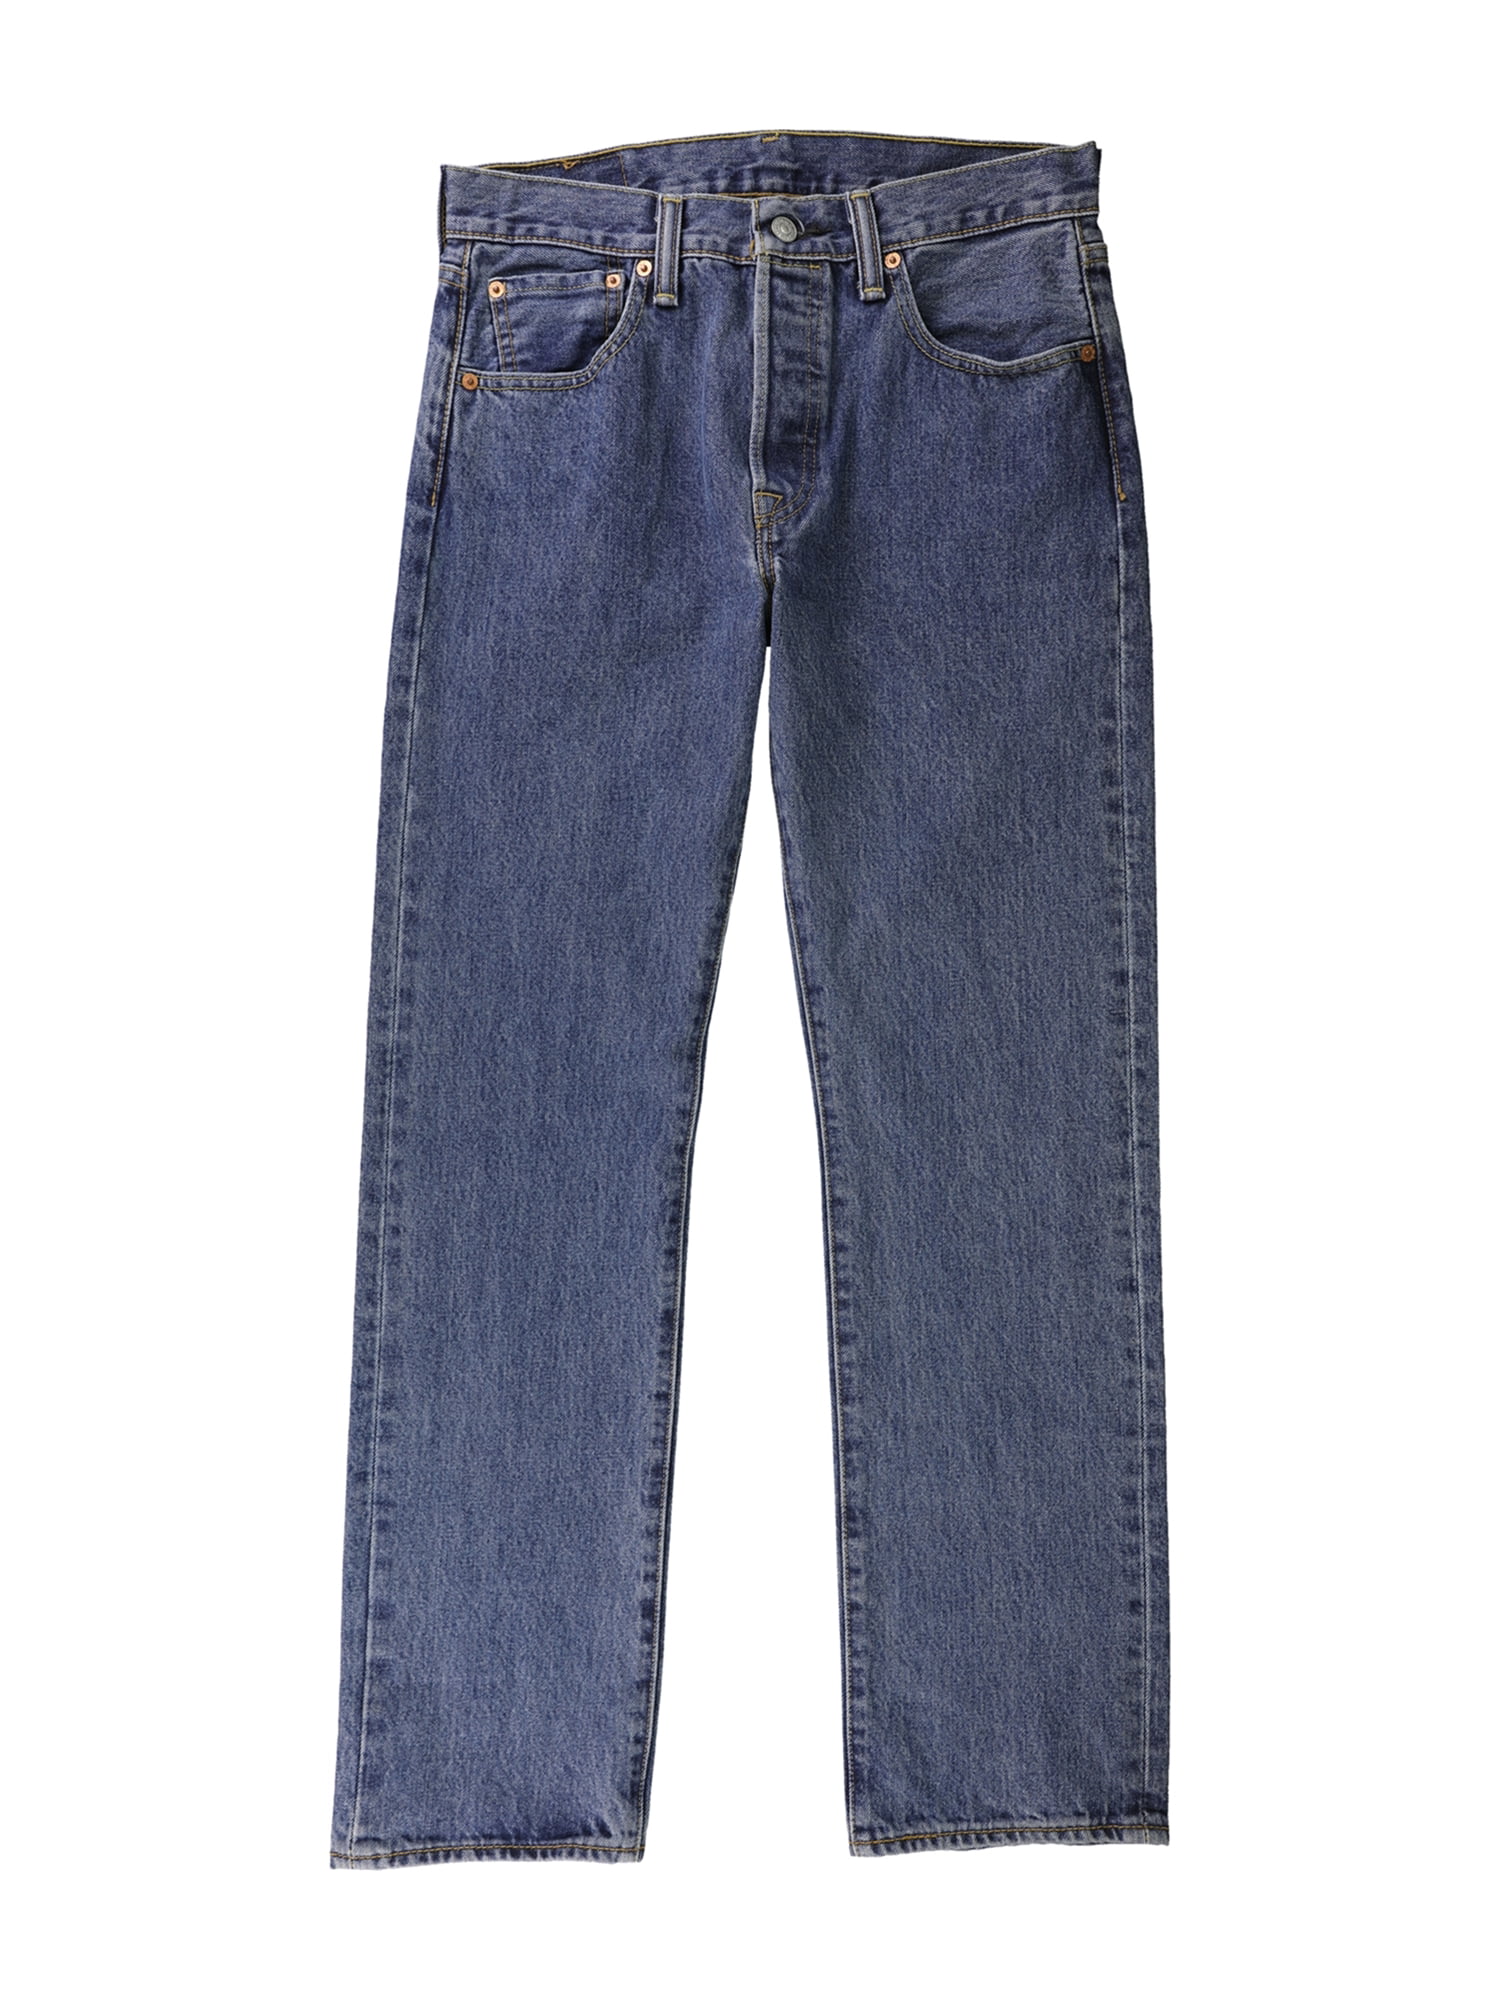 Levi's Mens 510 Regular Fit Jeans blue 30x30 | Walmart Canada